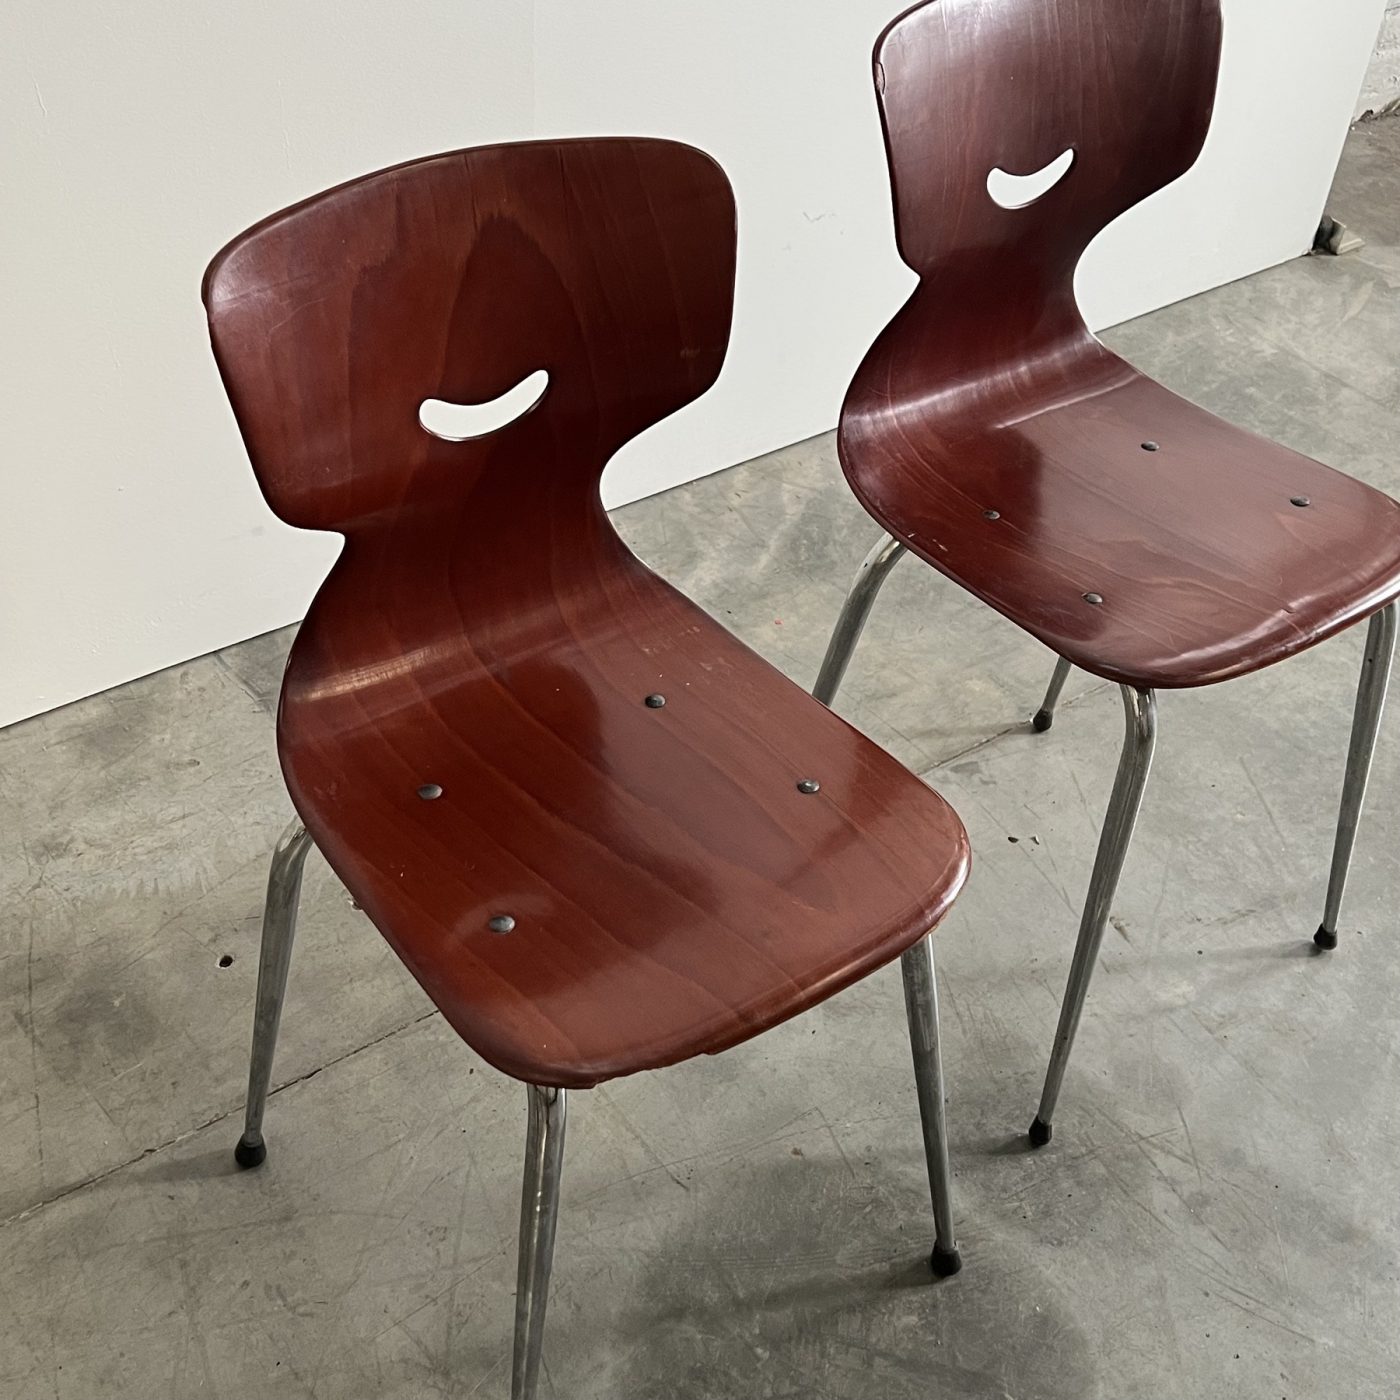 objet-vintage-chairs0001